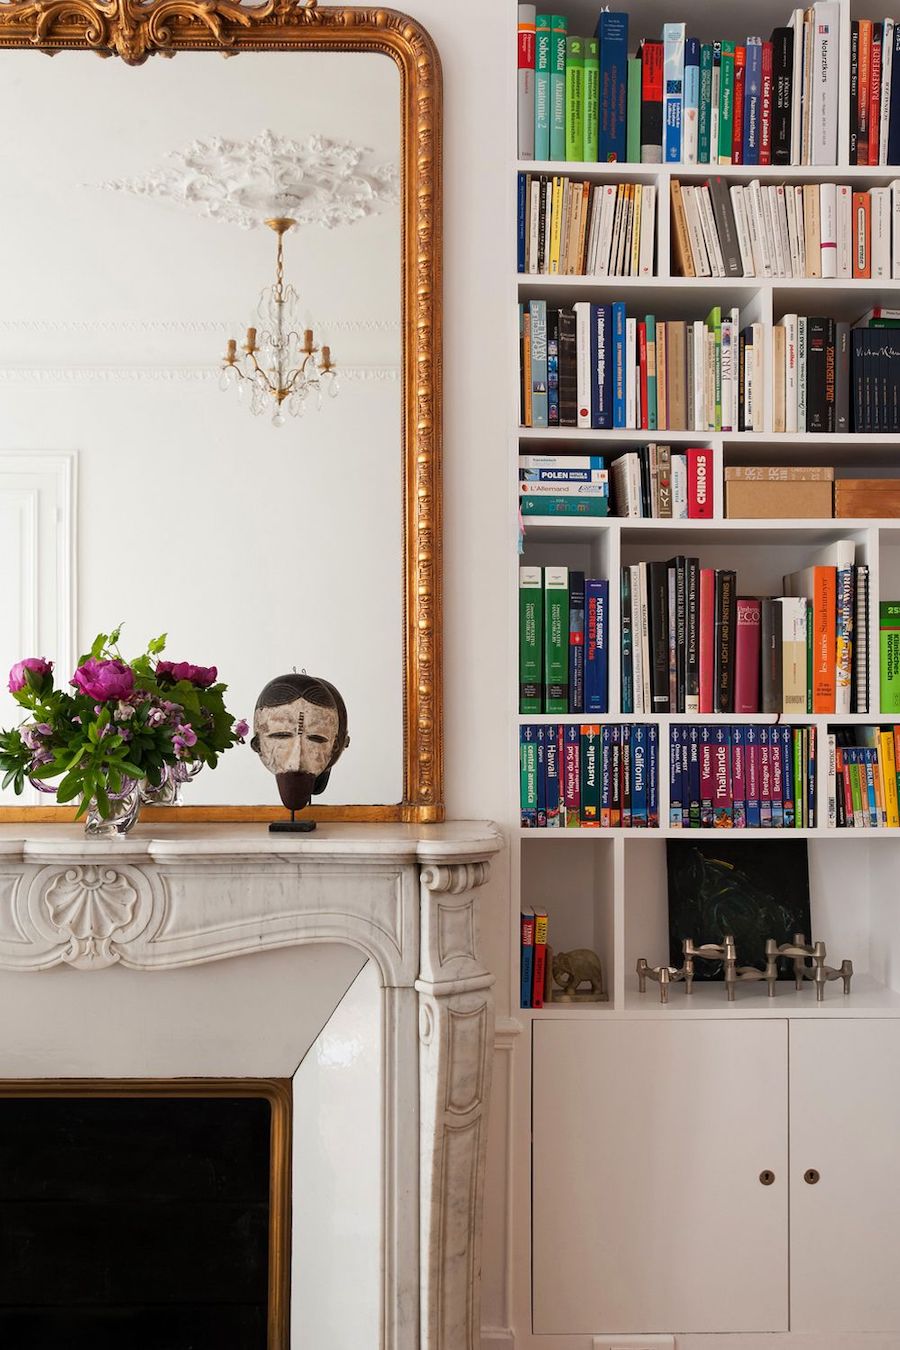 Parisian fireplace next to a bookshelf via havenin